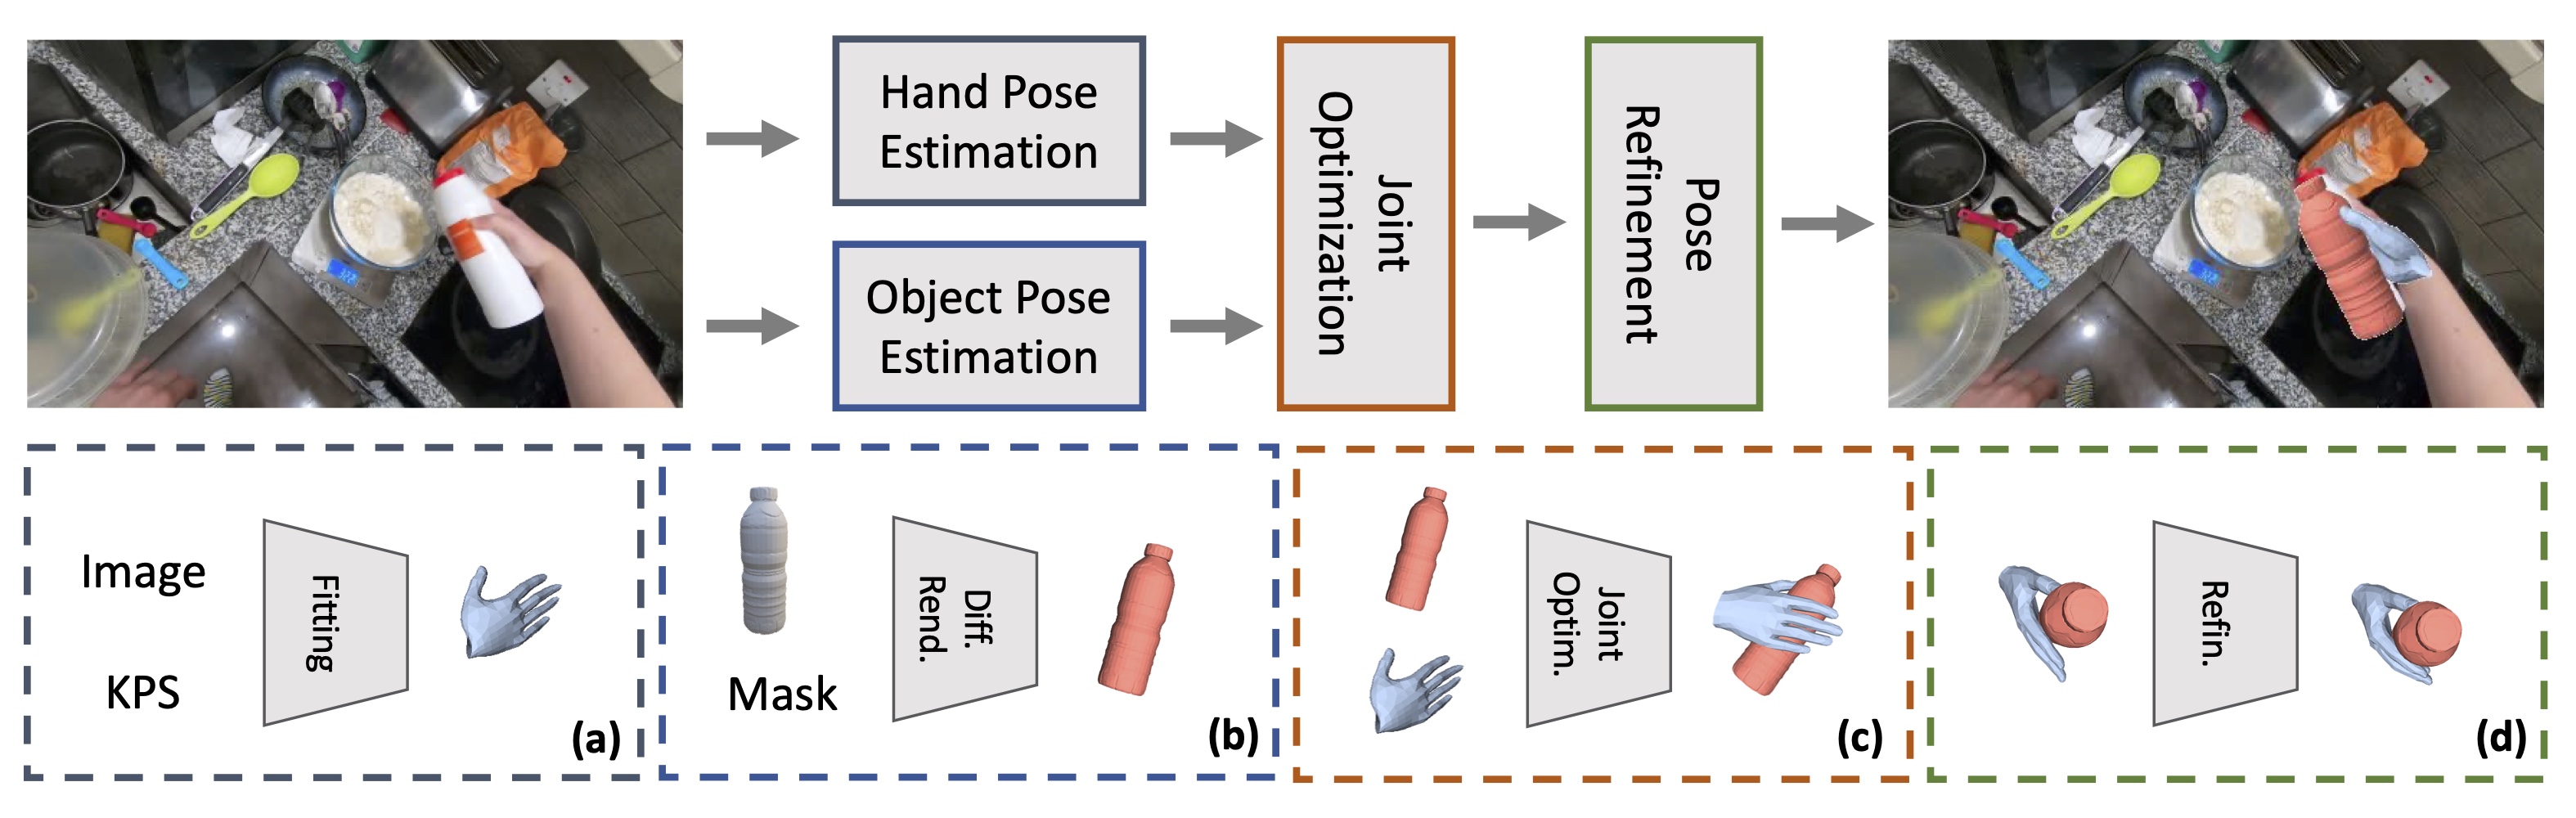 Human Pose Comparison and Action Scoring using Deep Learning,OpenCV &  Python | by Krishna Raj R | Analytics Vidhya | Medium